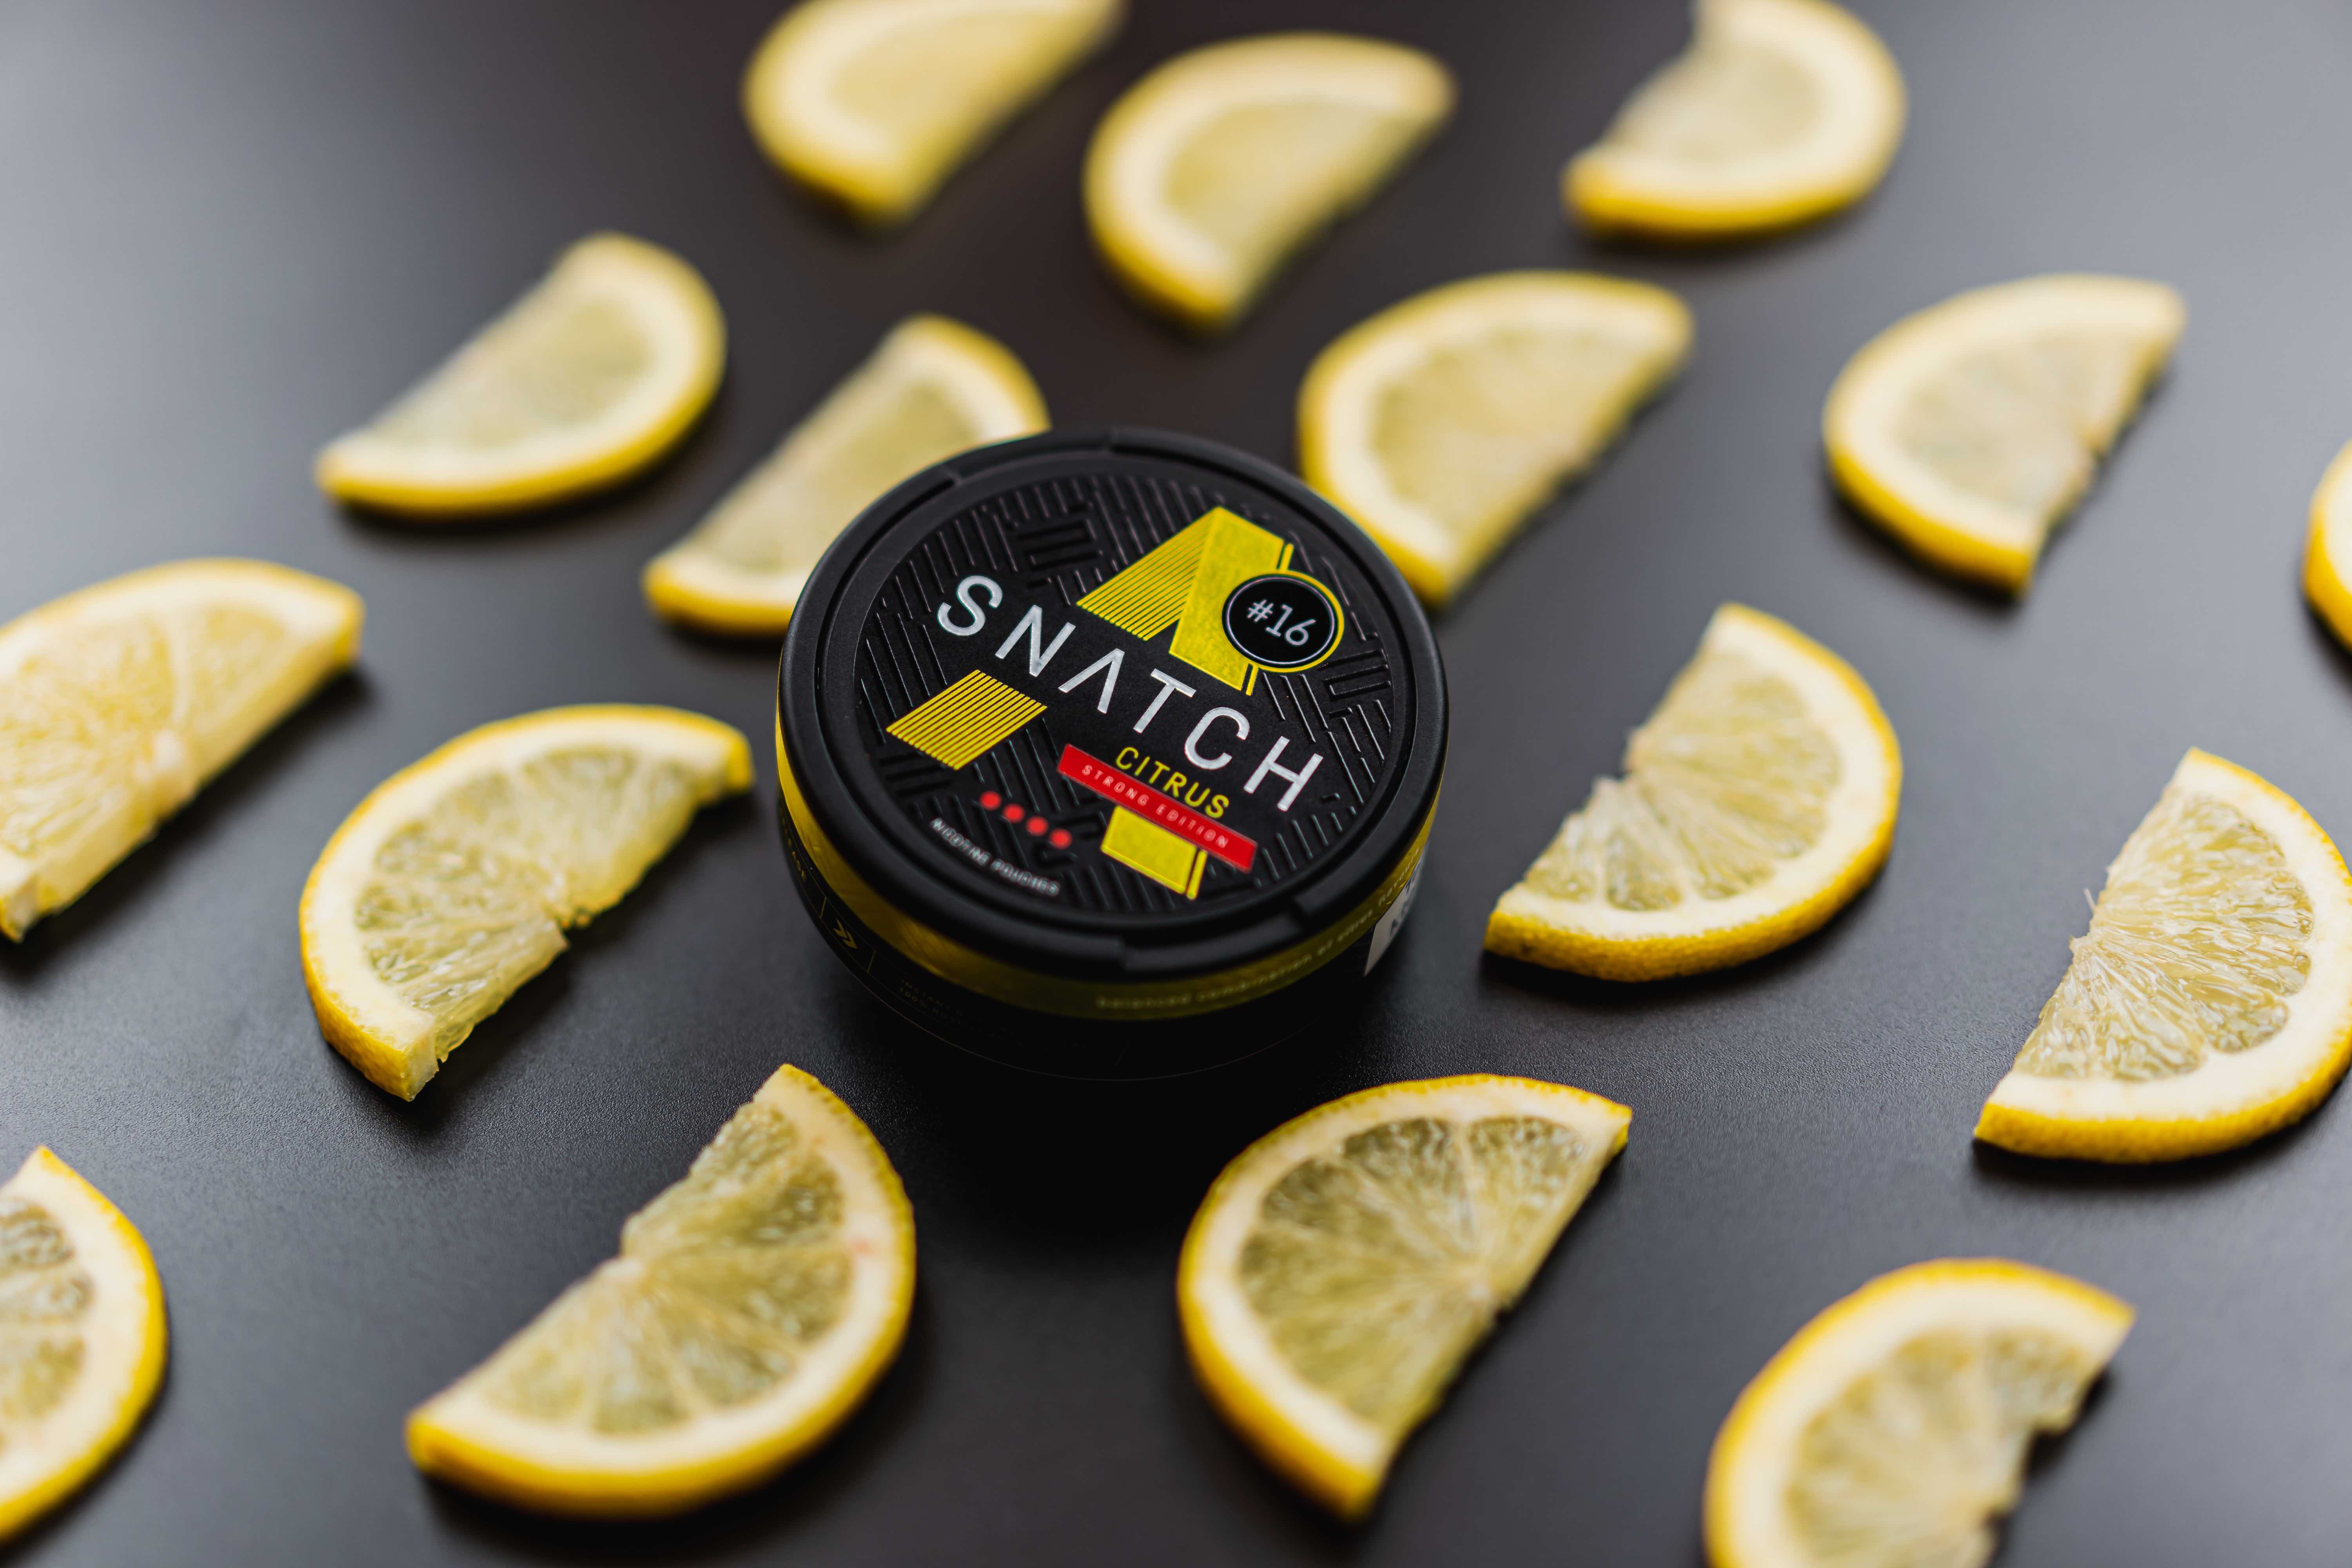 Nikotinové sáčky Snatch Citrus